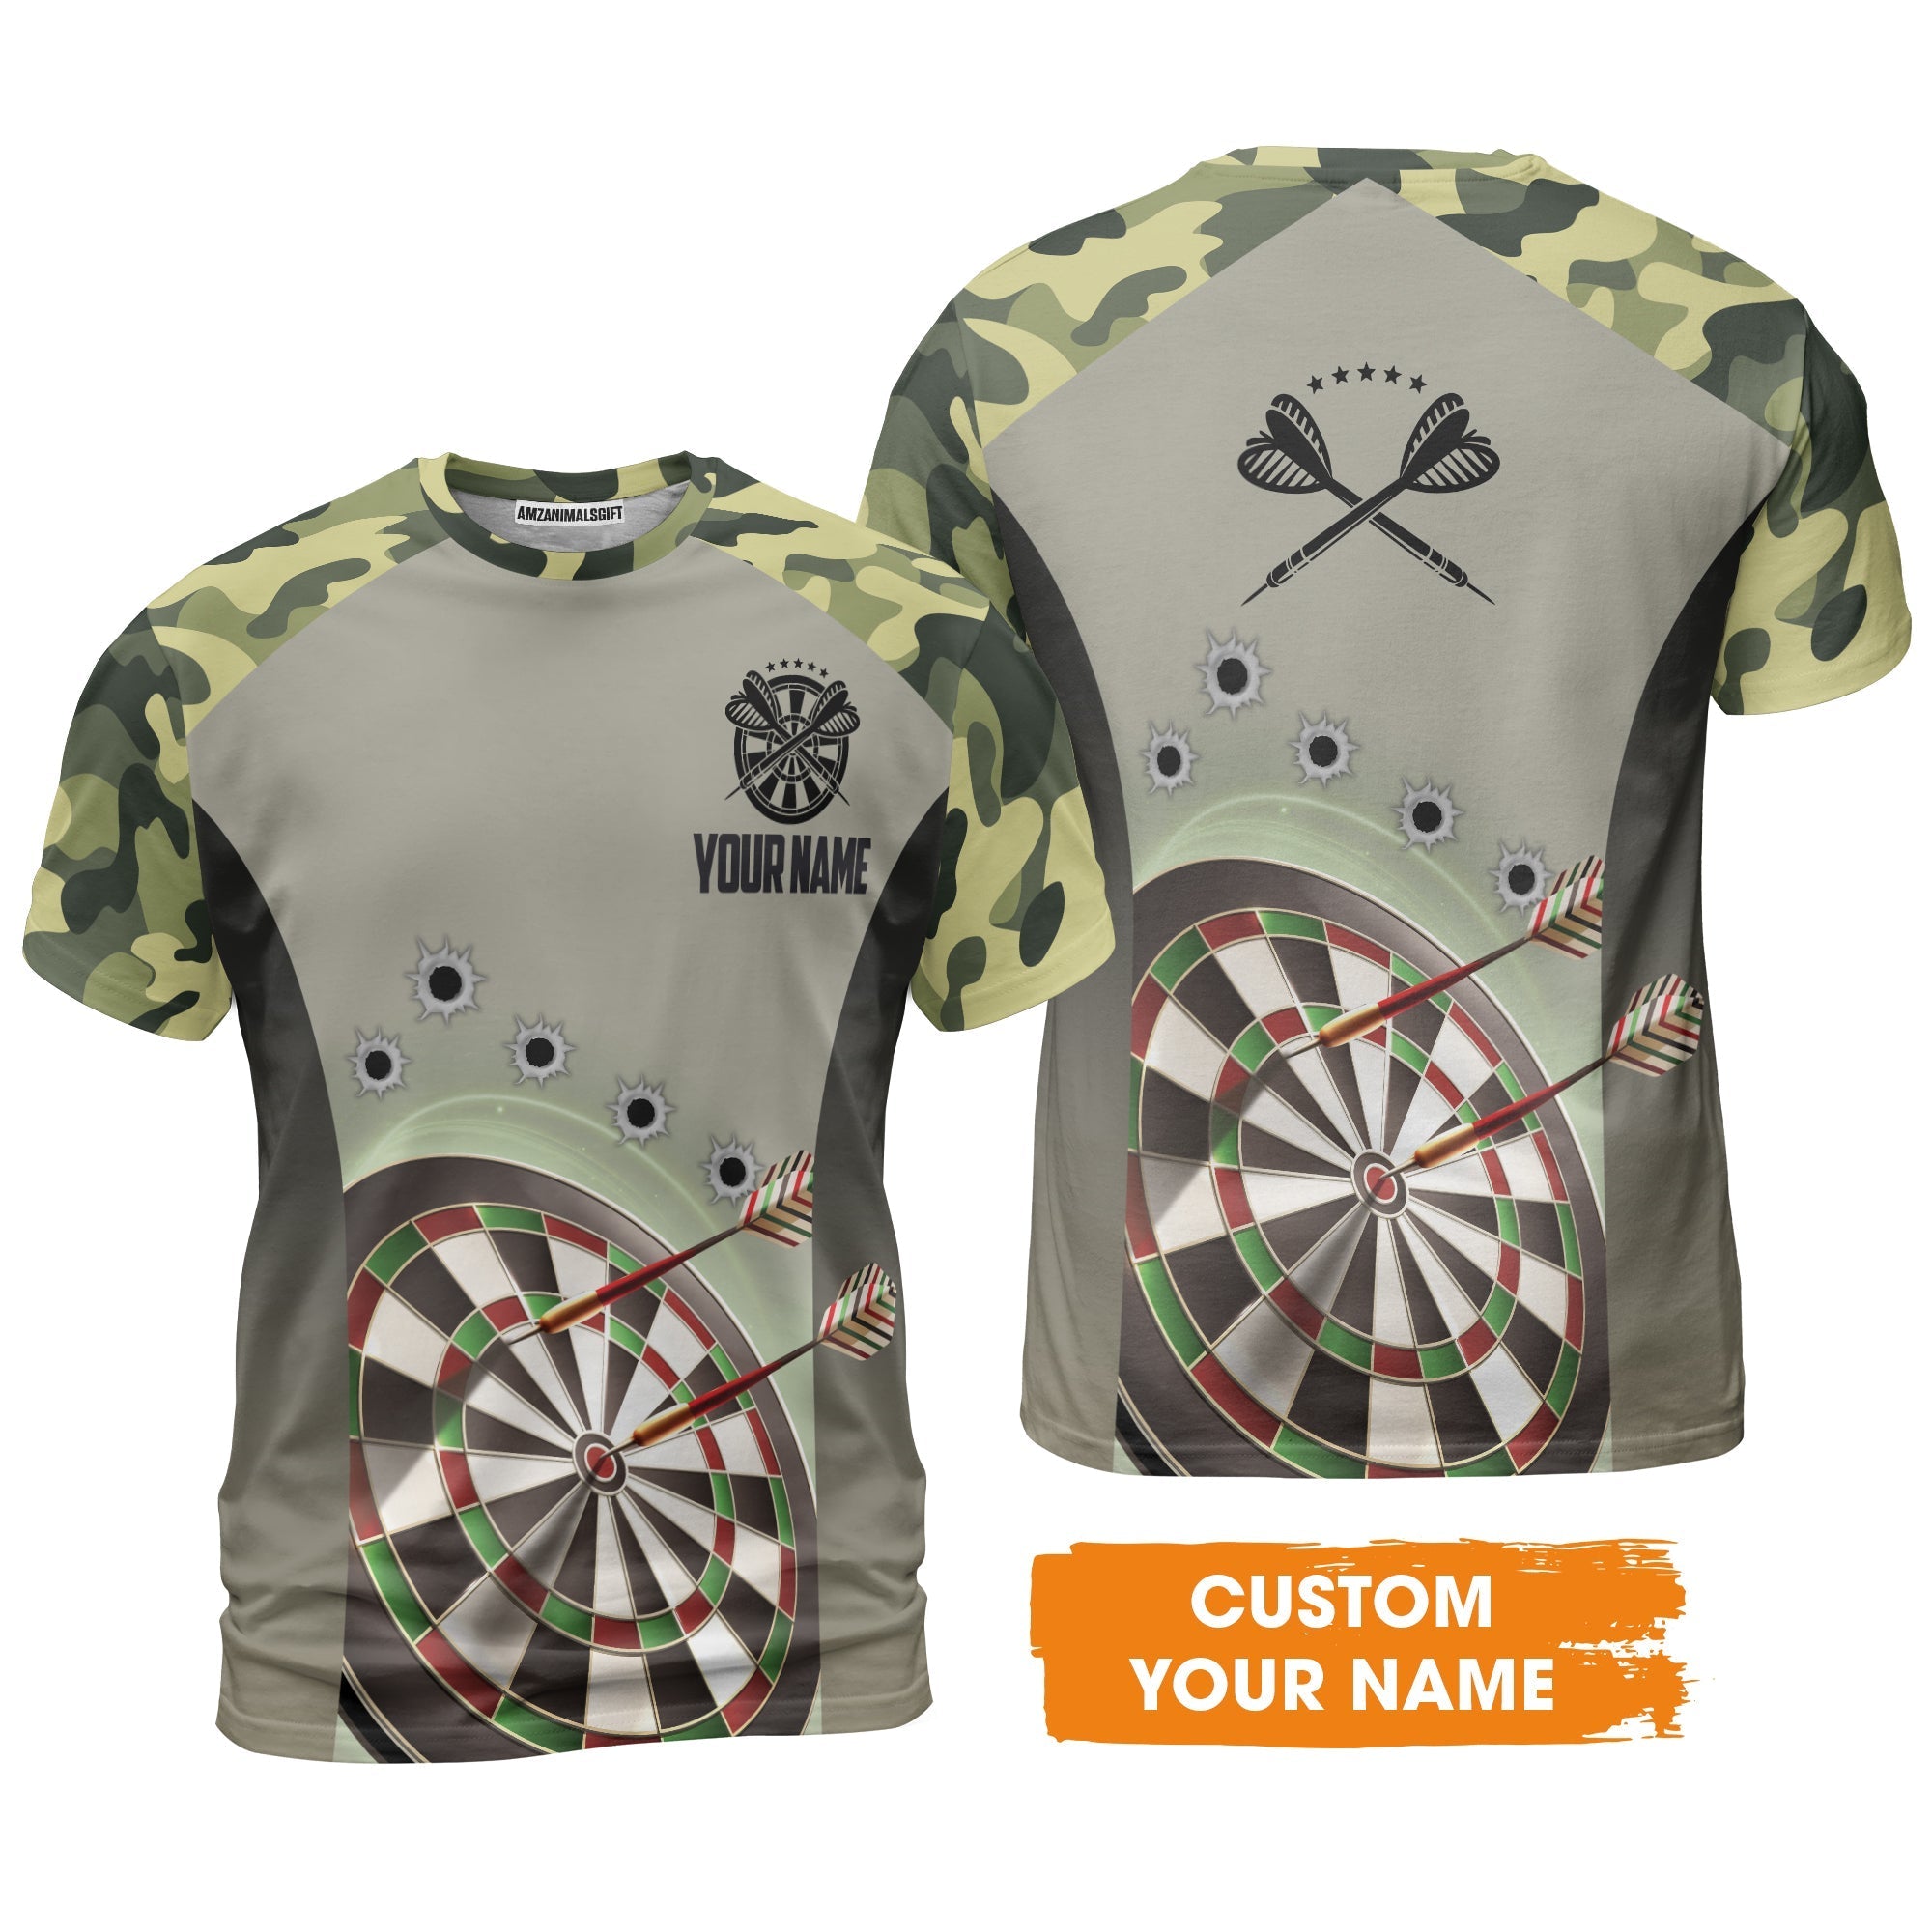 Customized Name Darts T-Shirt, Camo Pattern Personalized Darts T-Shirt - Perfect Gift For Darts Lovers